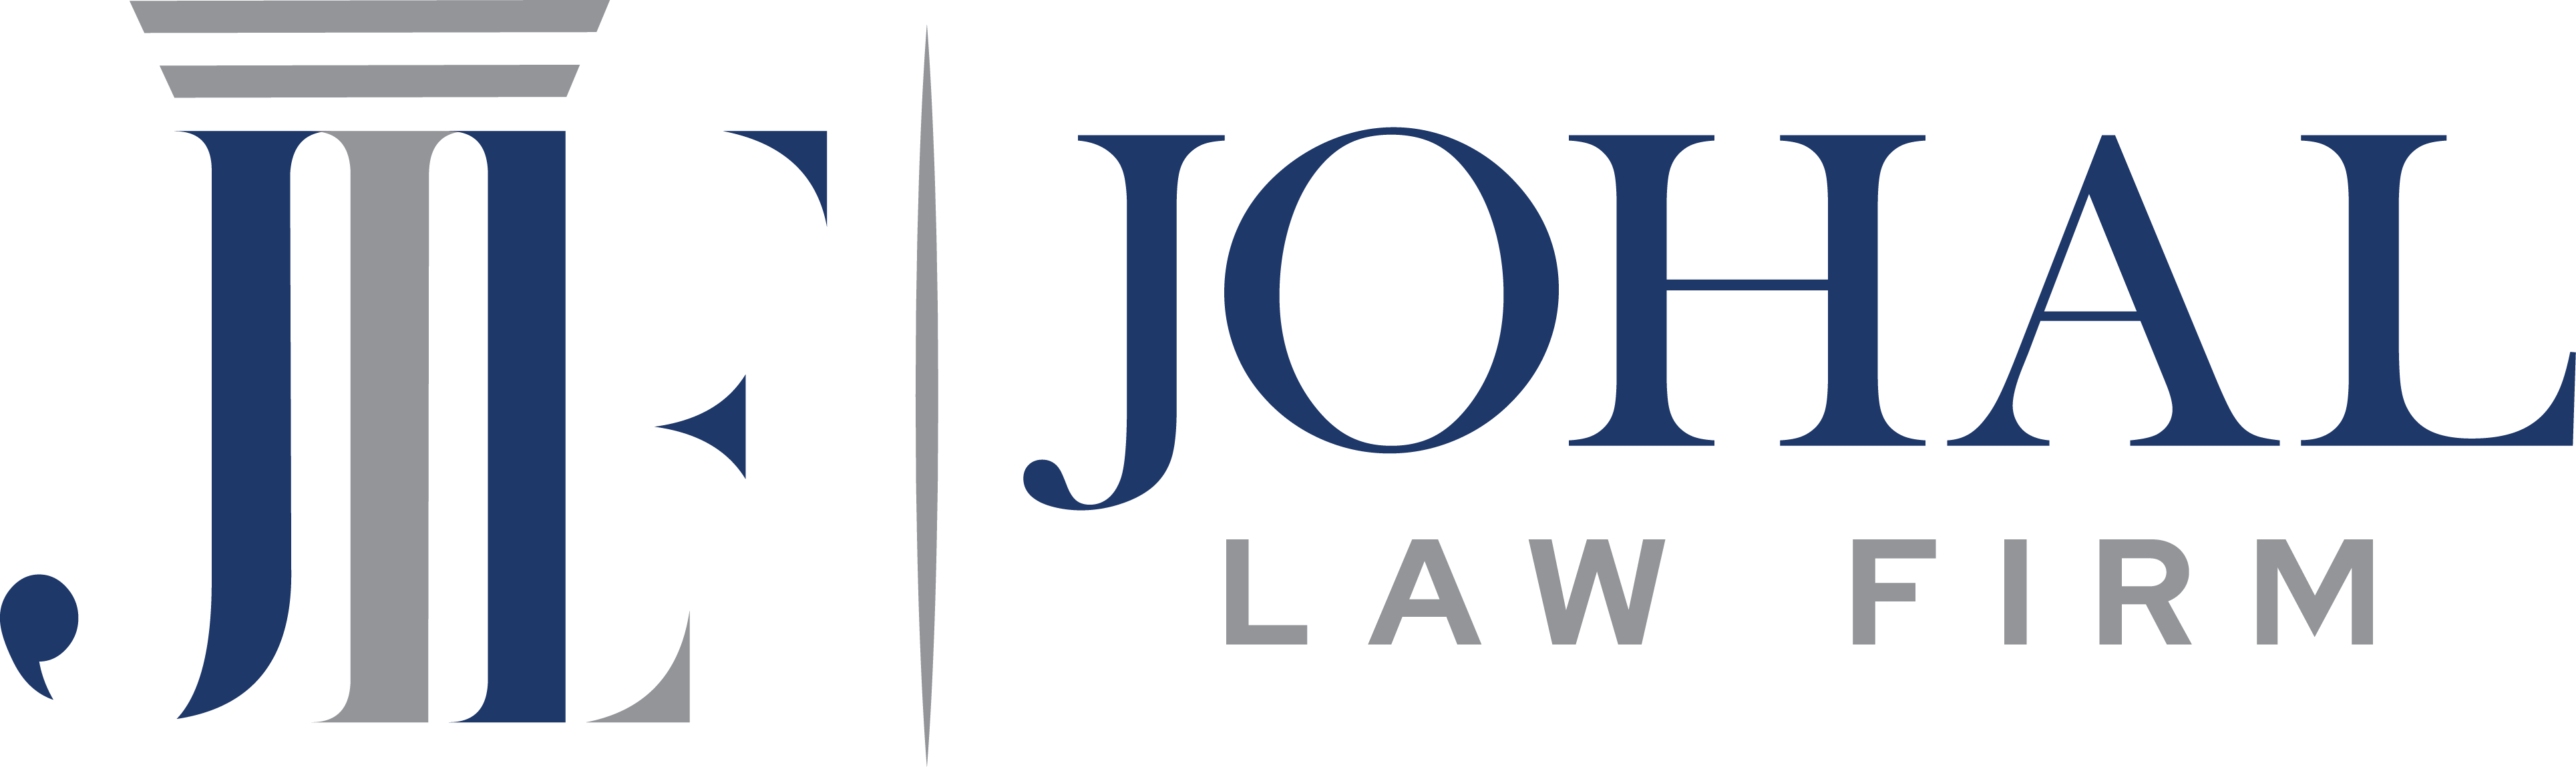 Johal Law Firm